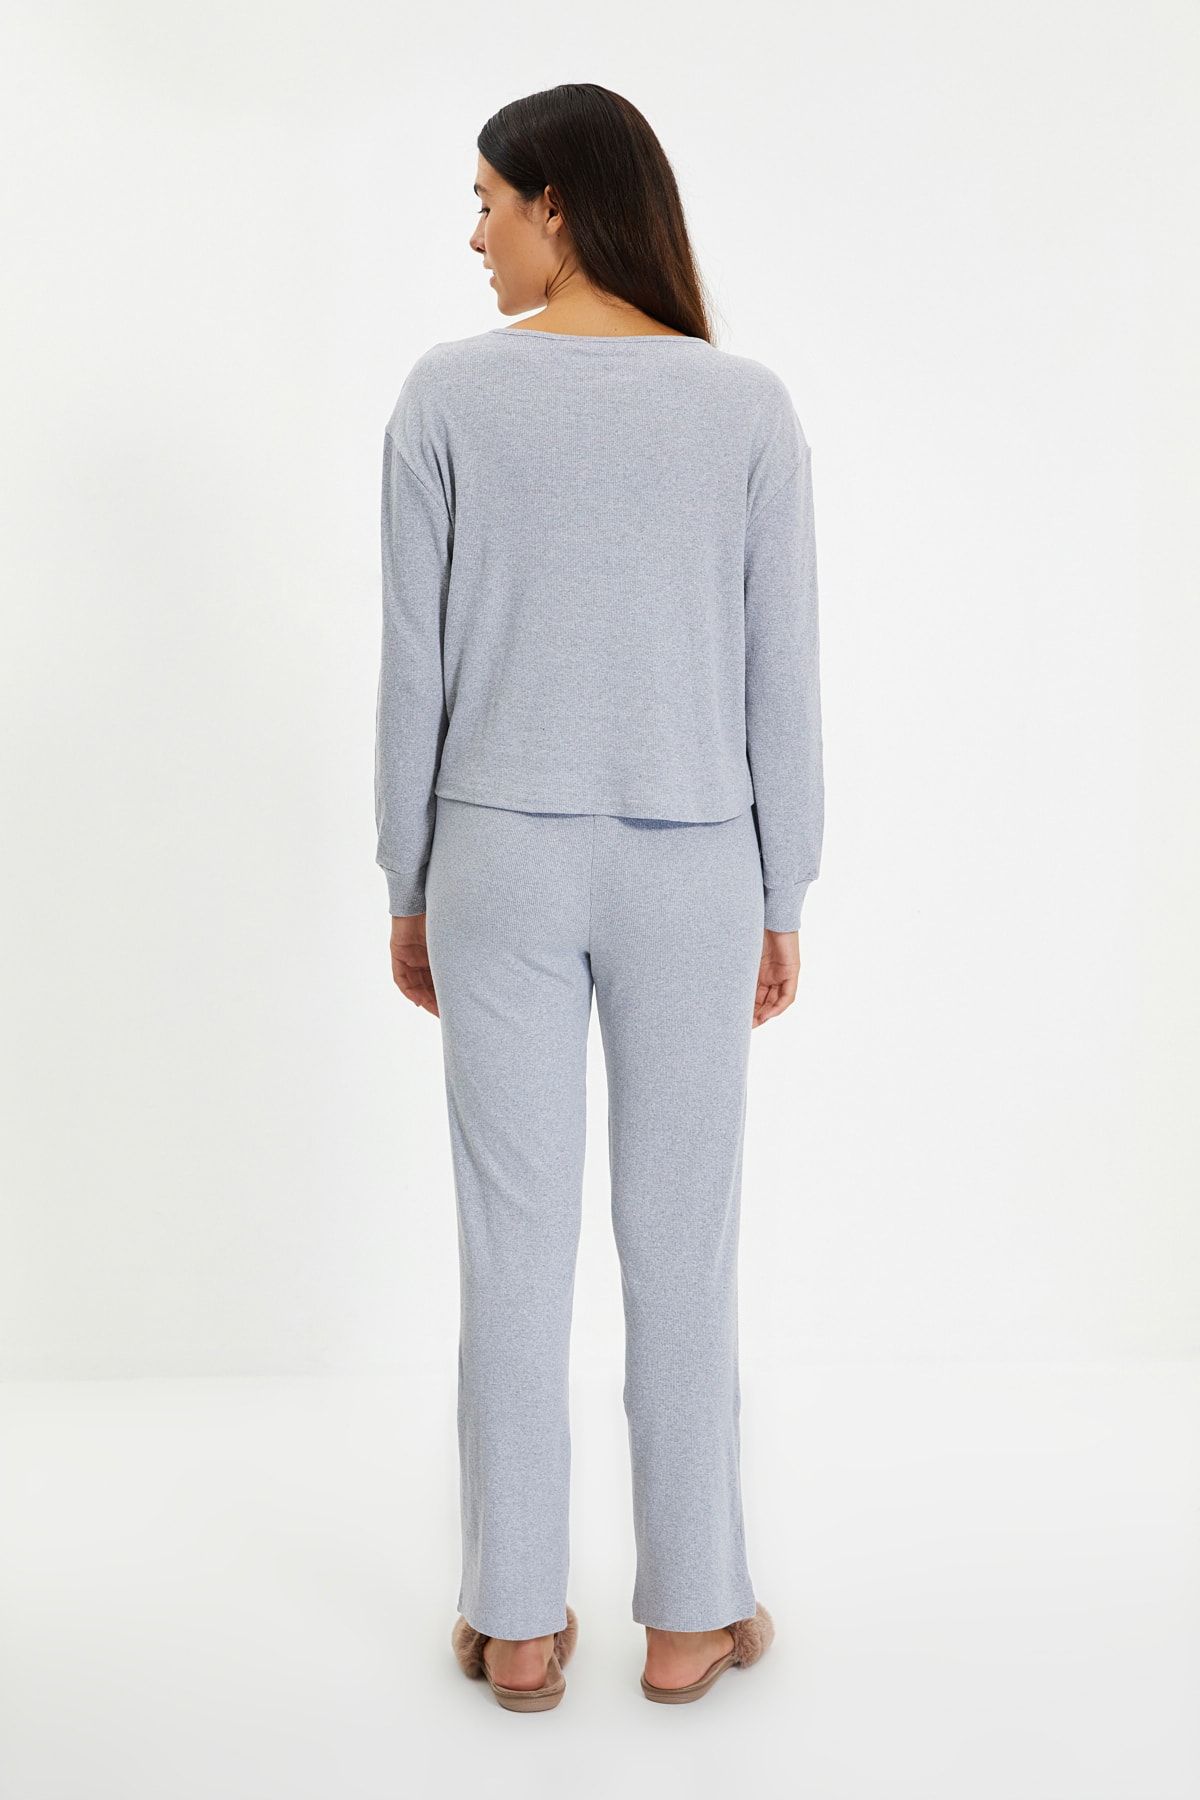 Modal Pajama Pants, The Gap Loungewear